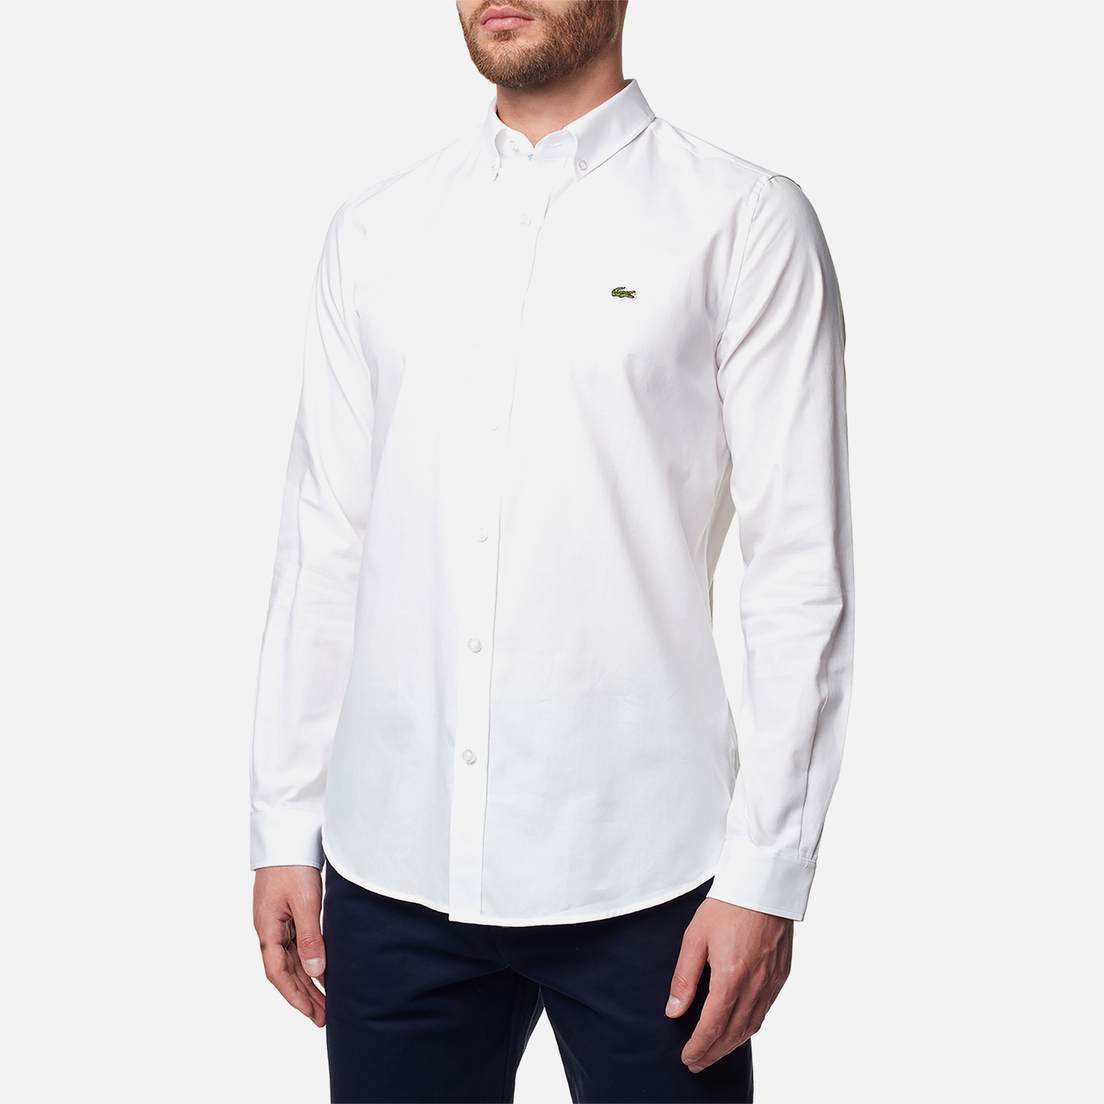 Lacoste Мужская рубашка Slim Fit Button Collar